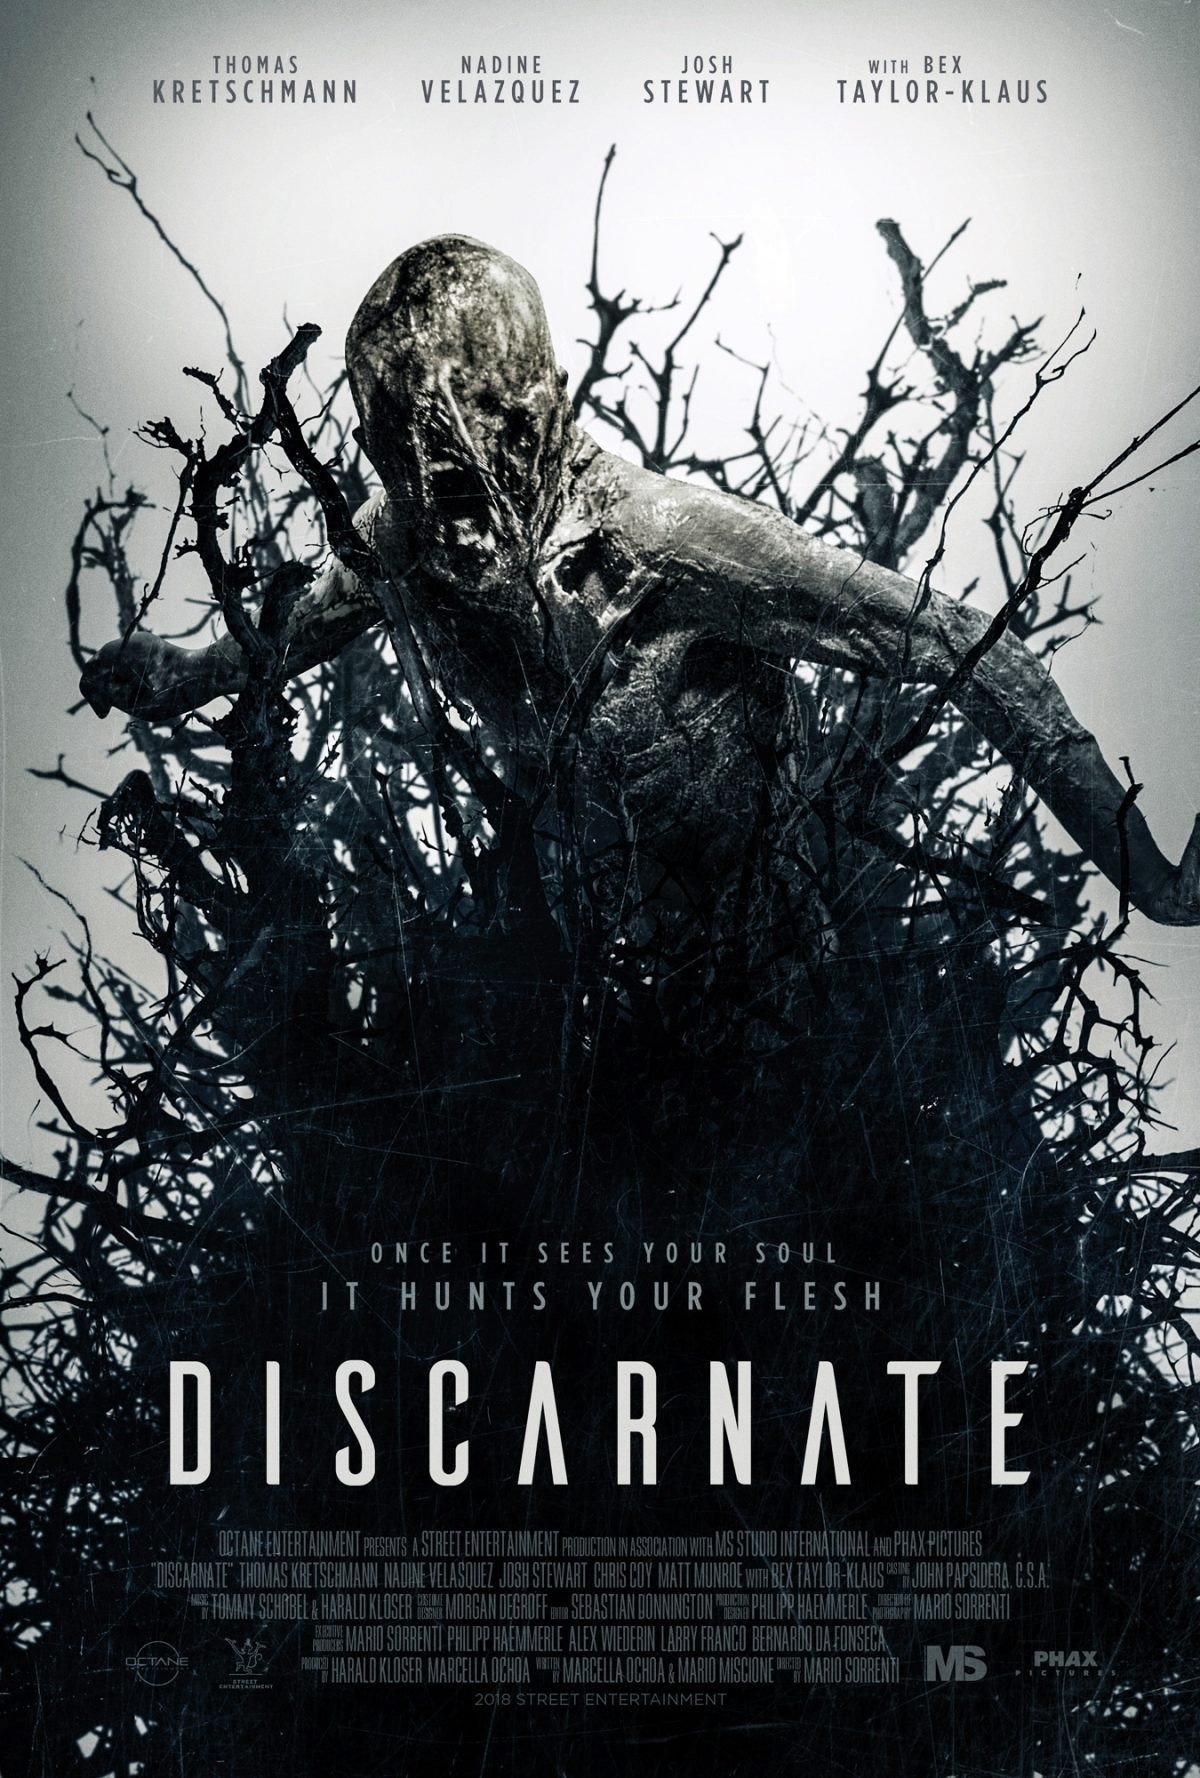 Poster of Street Entertainment's Discarnate (2018)